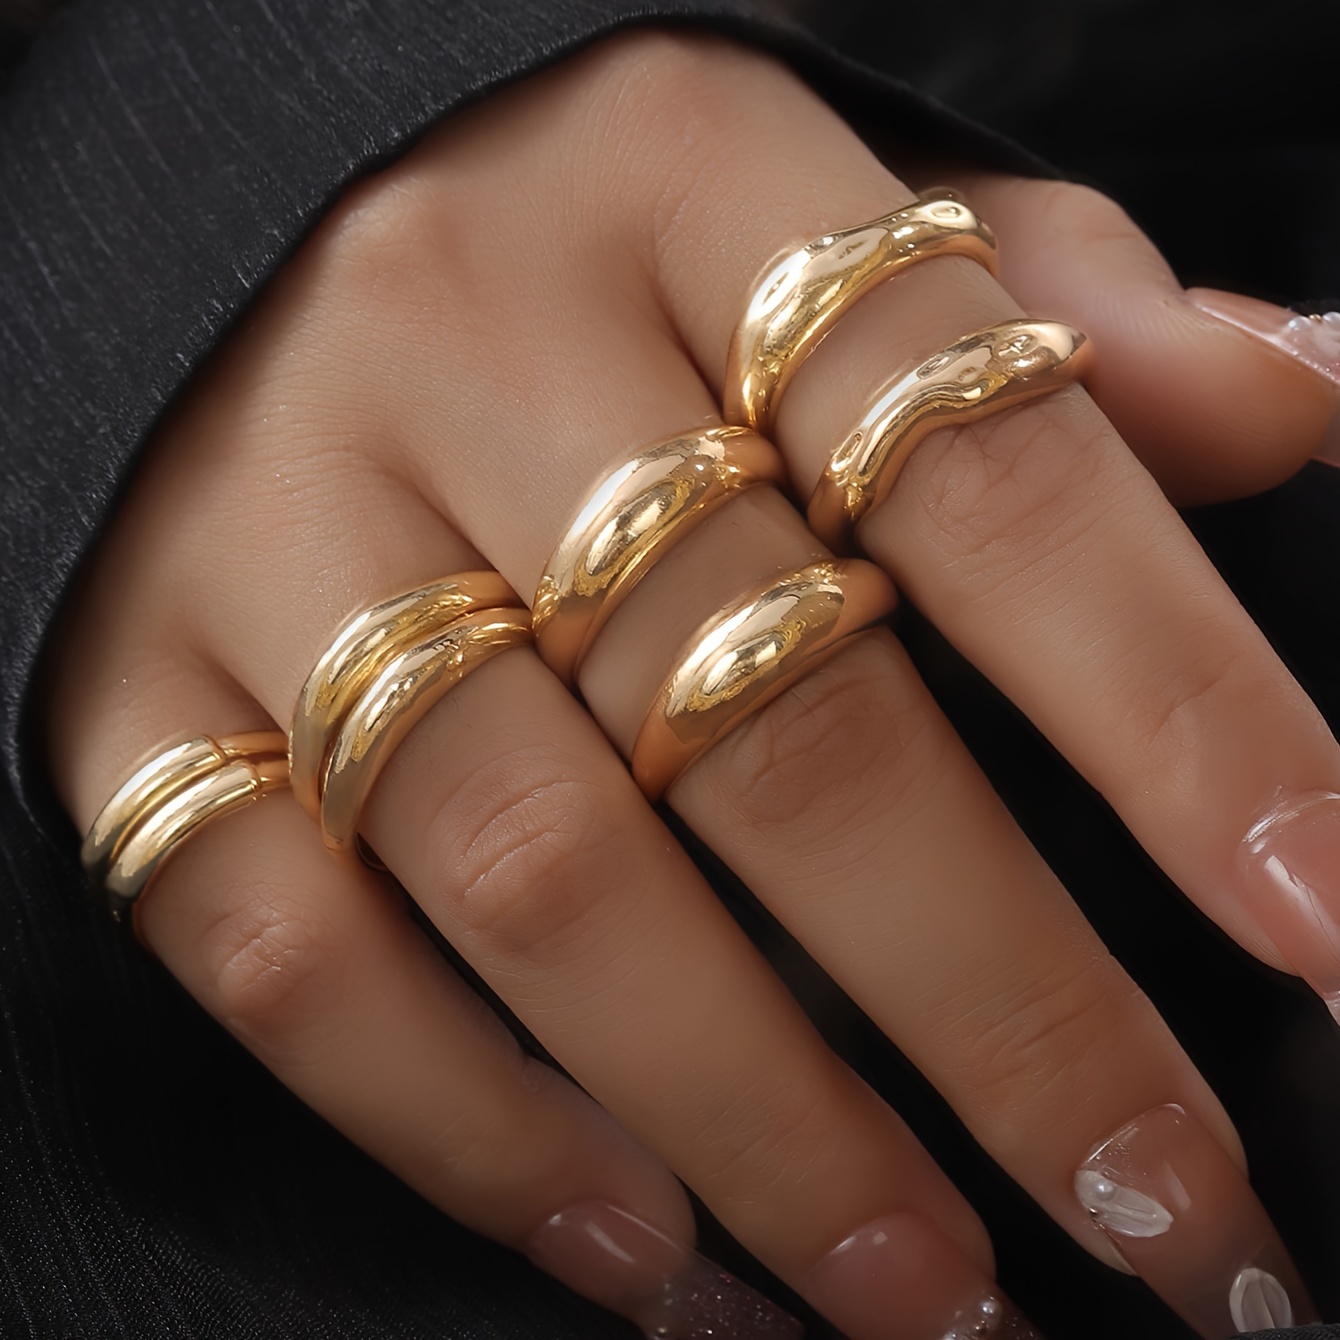 

8pcs Golden Tone Stylish Rings Set, Elegant & Minimalist Style Band Ring Set, Chic Women's Jewelry Accessory